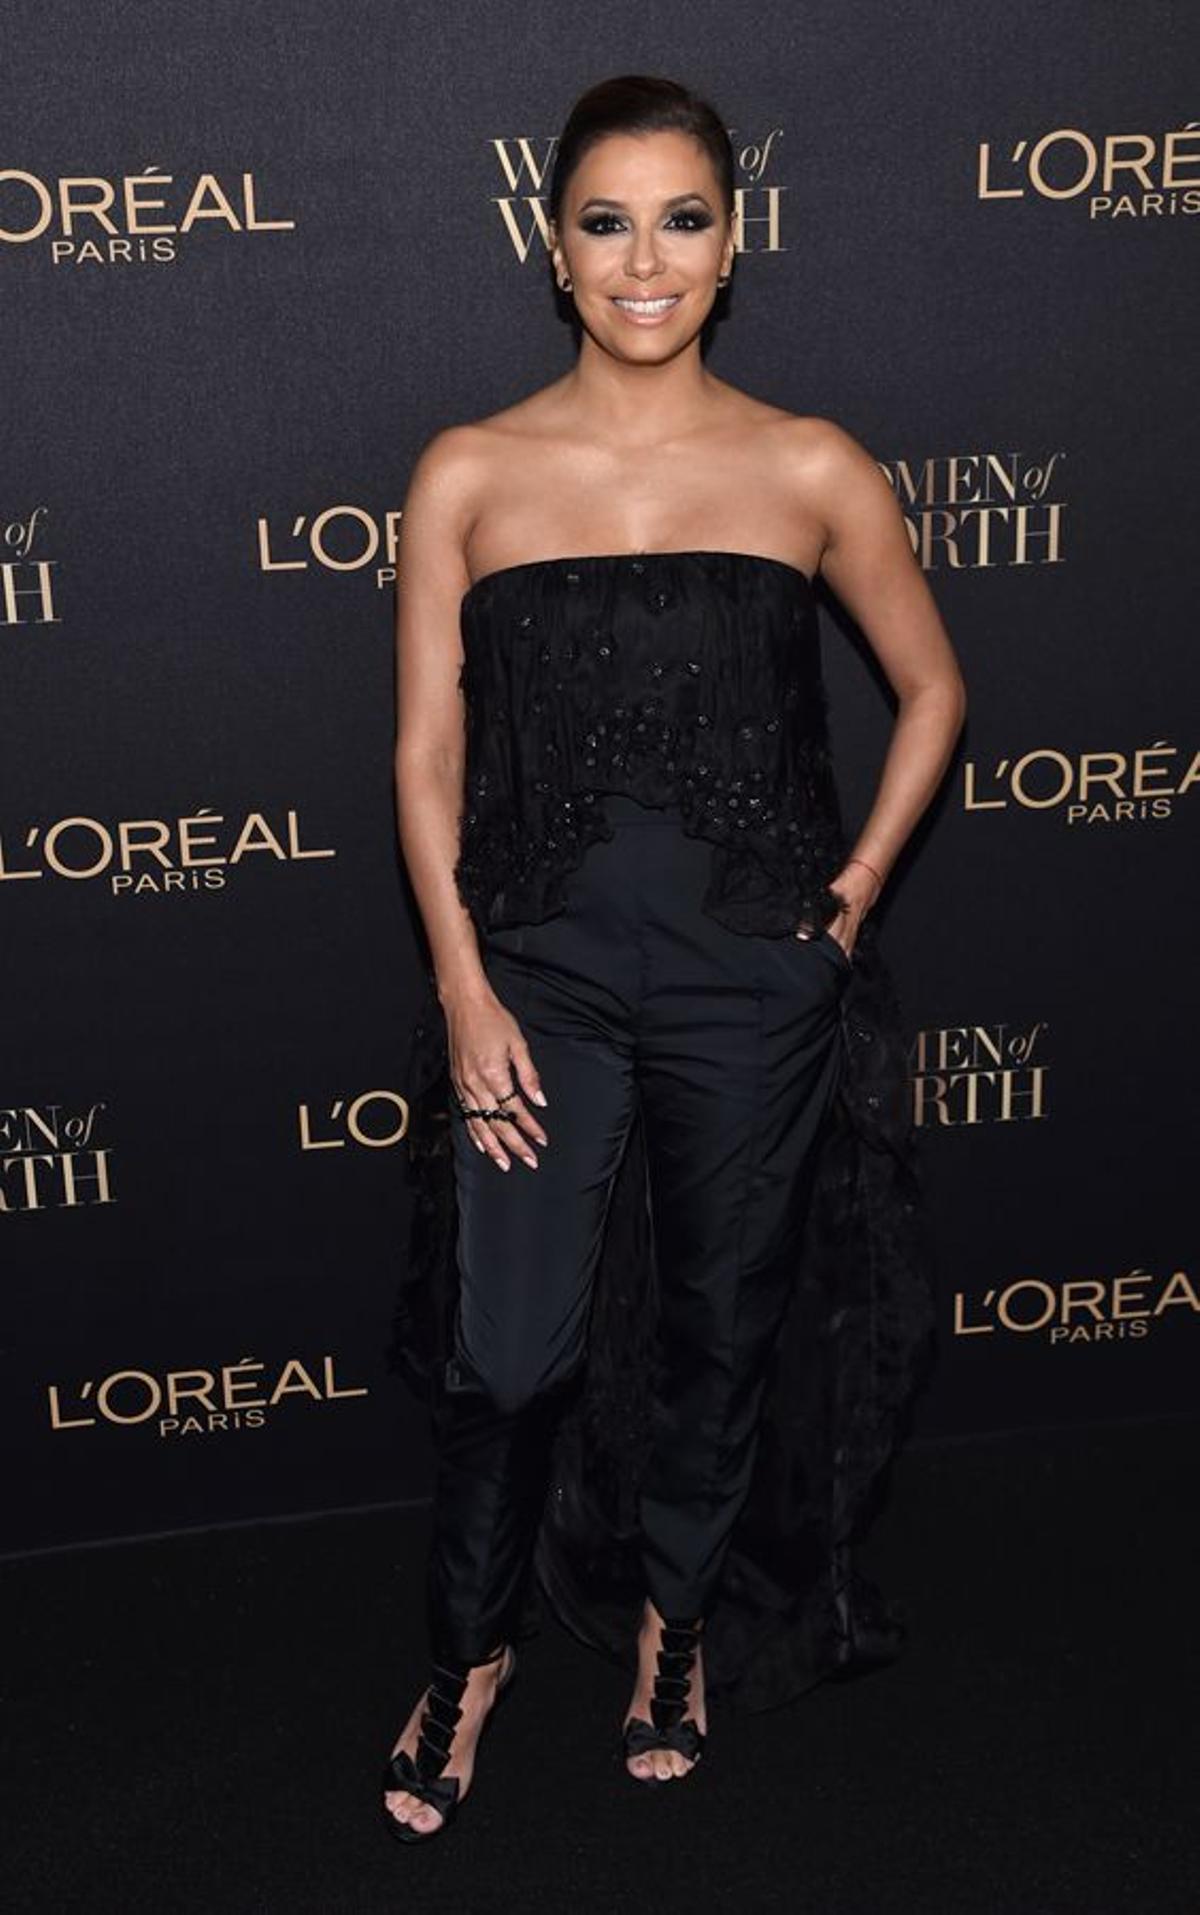 L'Oreal Women of Worth Awards: Eva Longoria